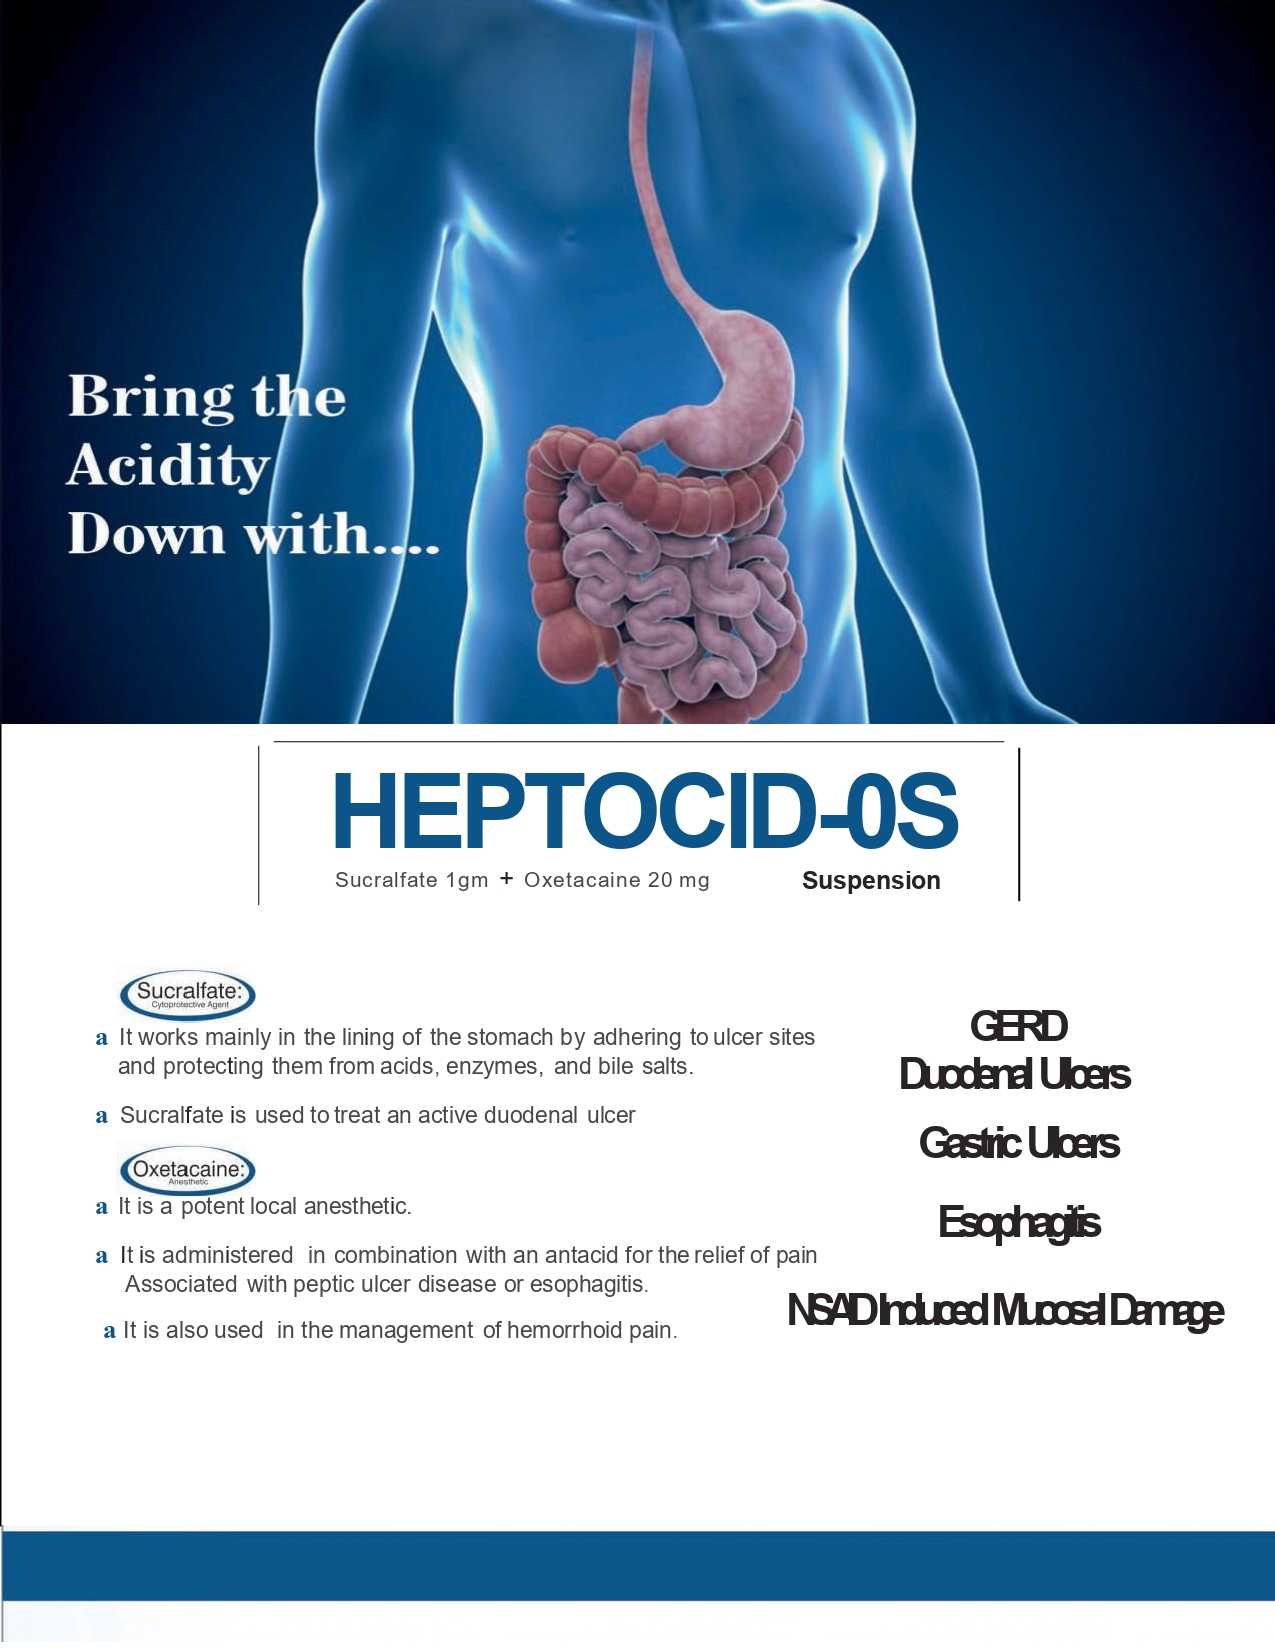 HEPTOCID-OS